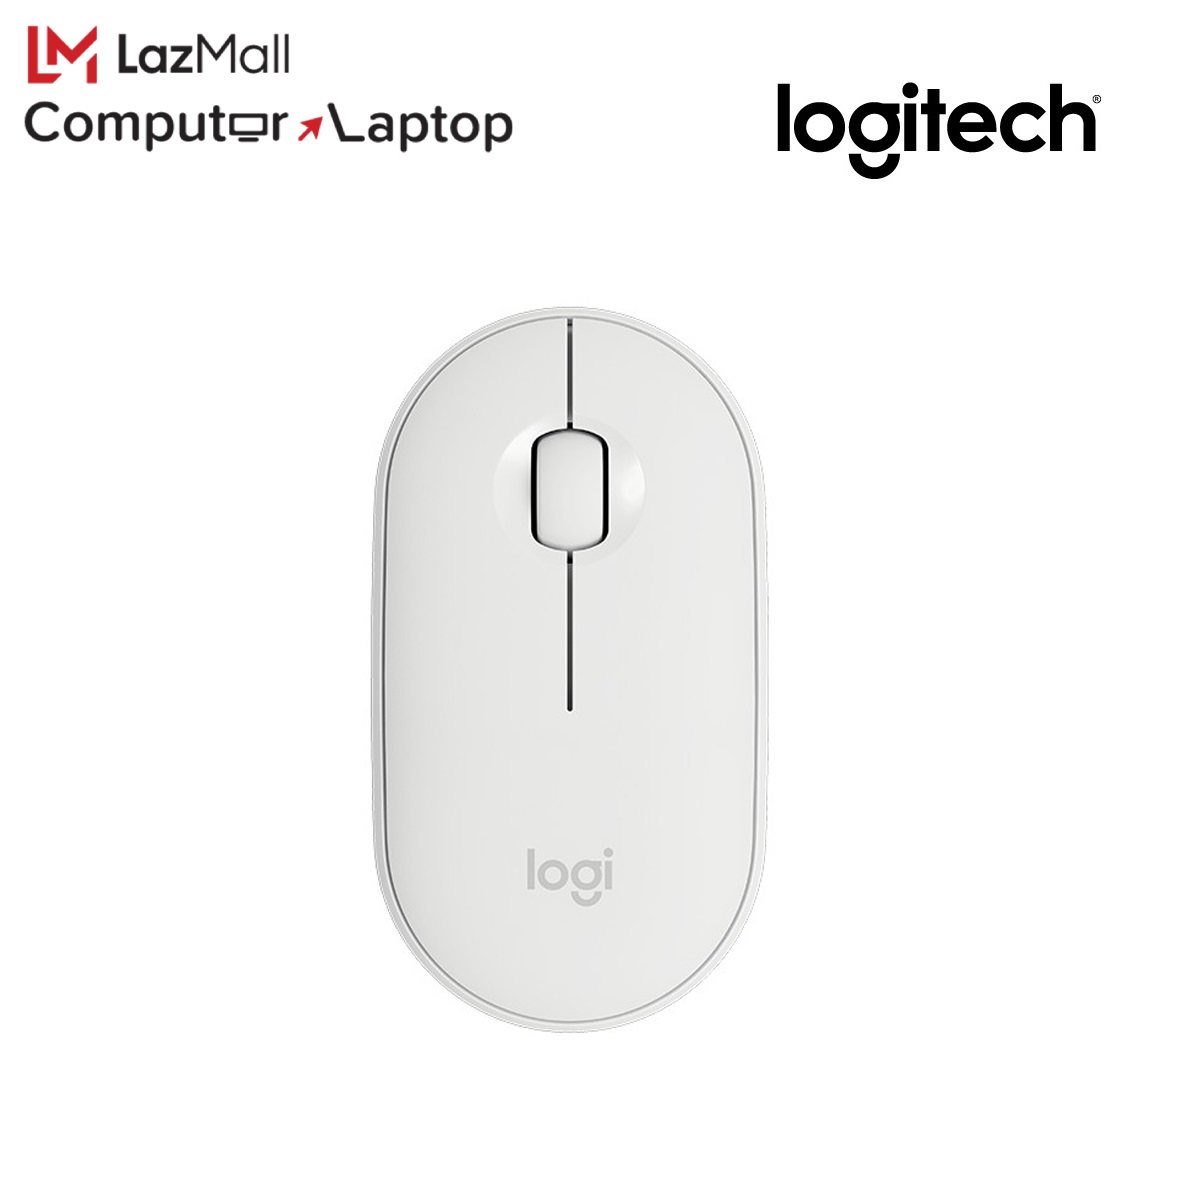 Logitech Pebble M350 Wireless Mouse ระยะการเชื่อมต่อไร้สาย 10 เมตร, DPI 1000, เทคโนโลยี Bluetooth พลังงานต่ำ, port USB  (M350-WIRELESS-MS) ( เมาส์)